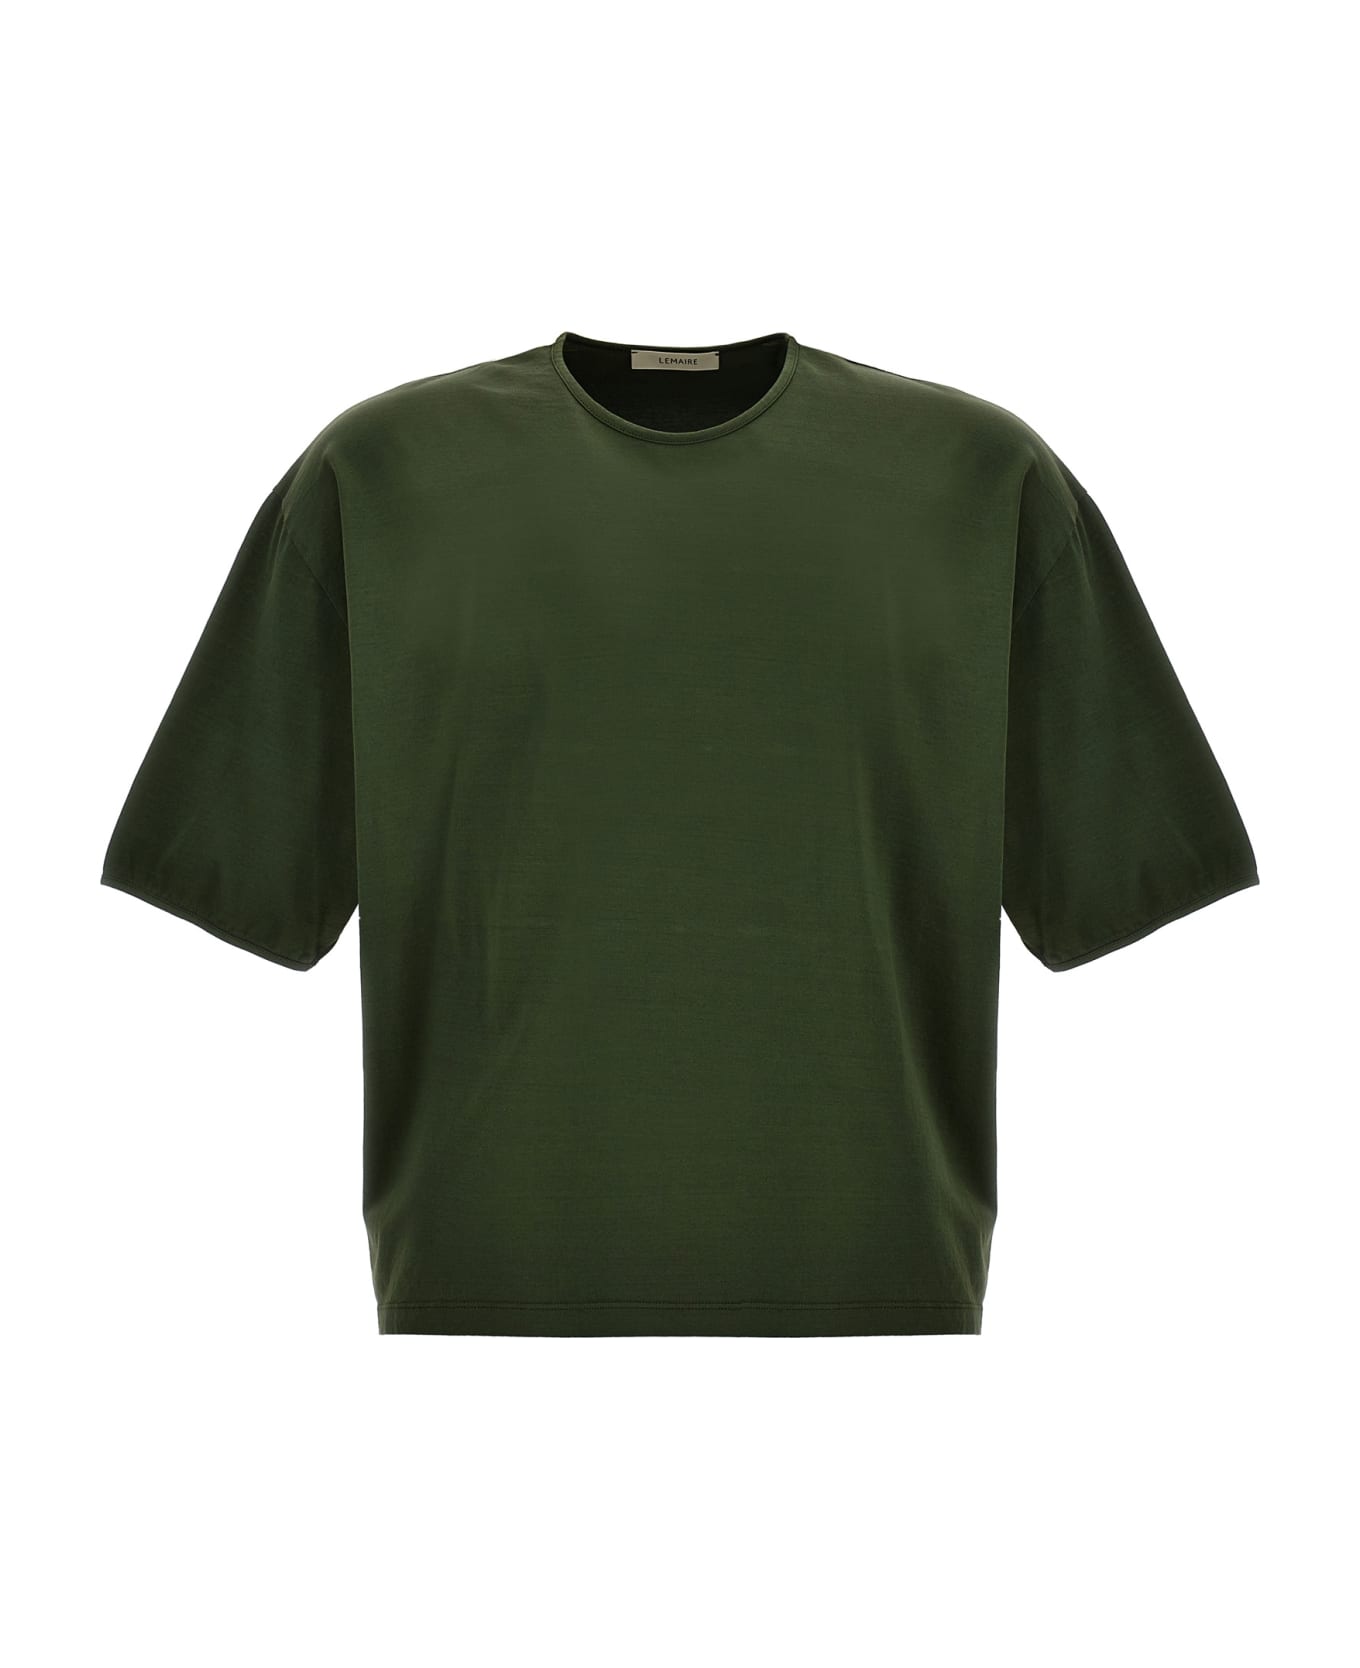 Lemaire Mercerized Cotton T-shirt - Green